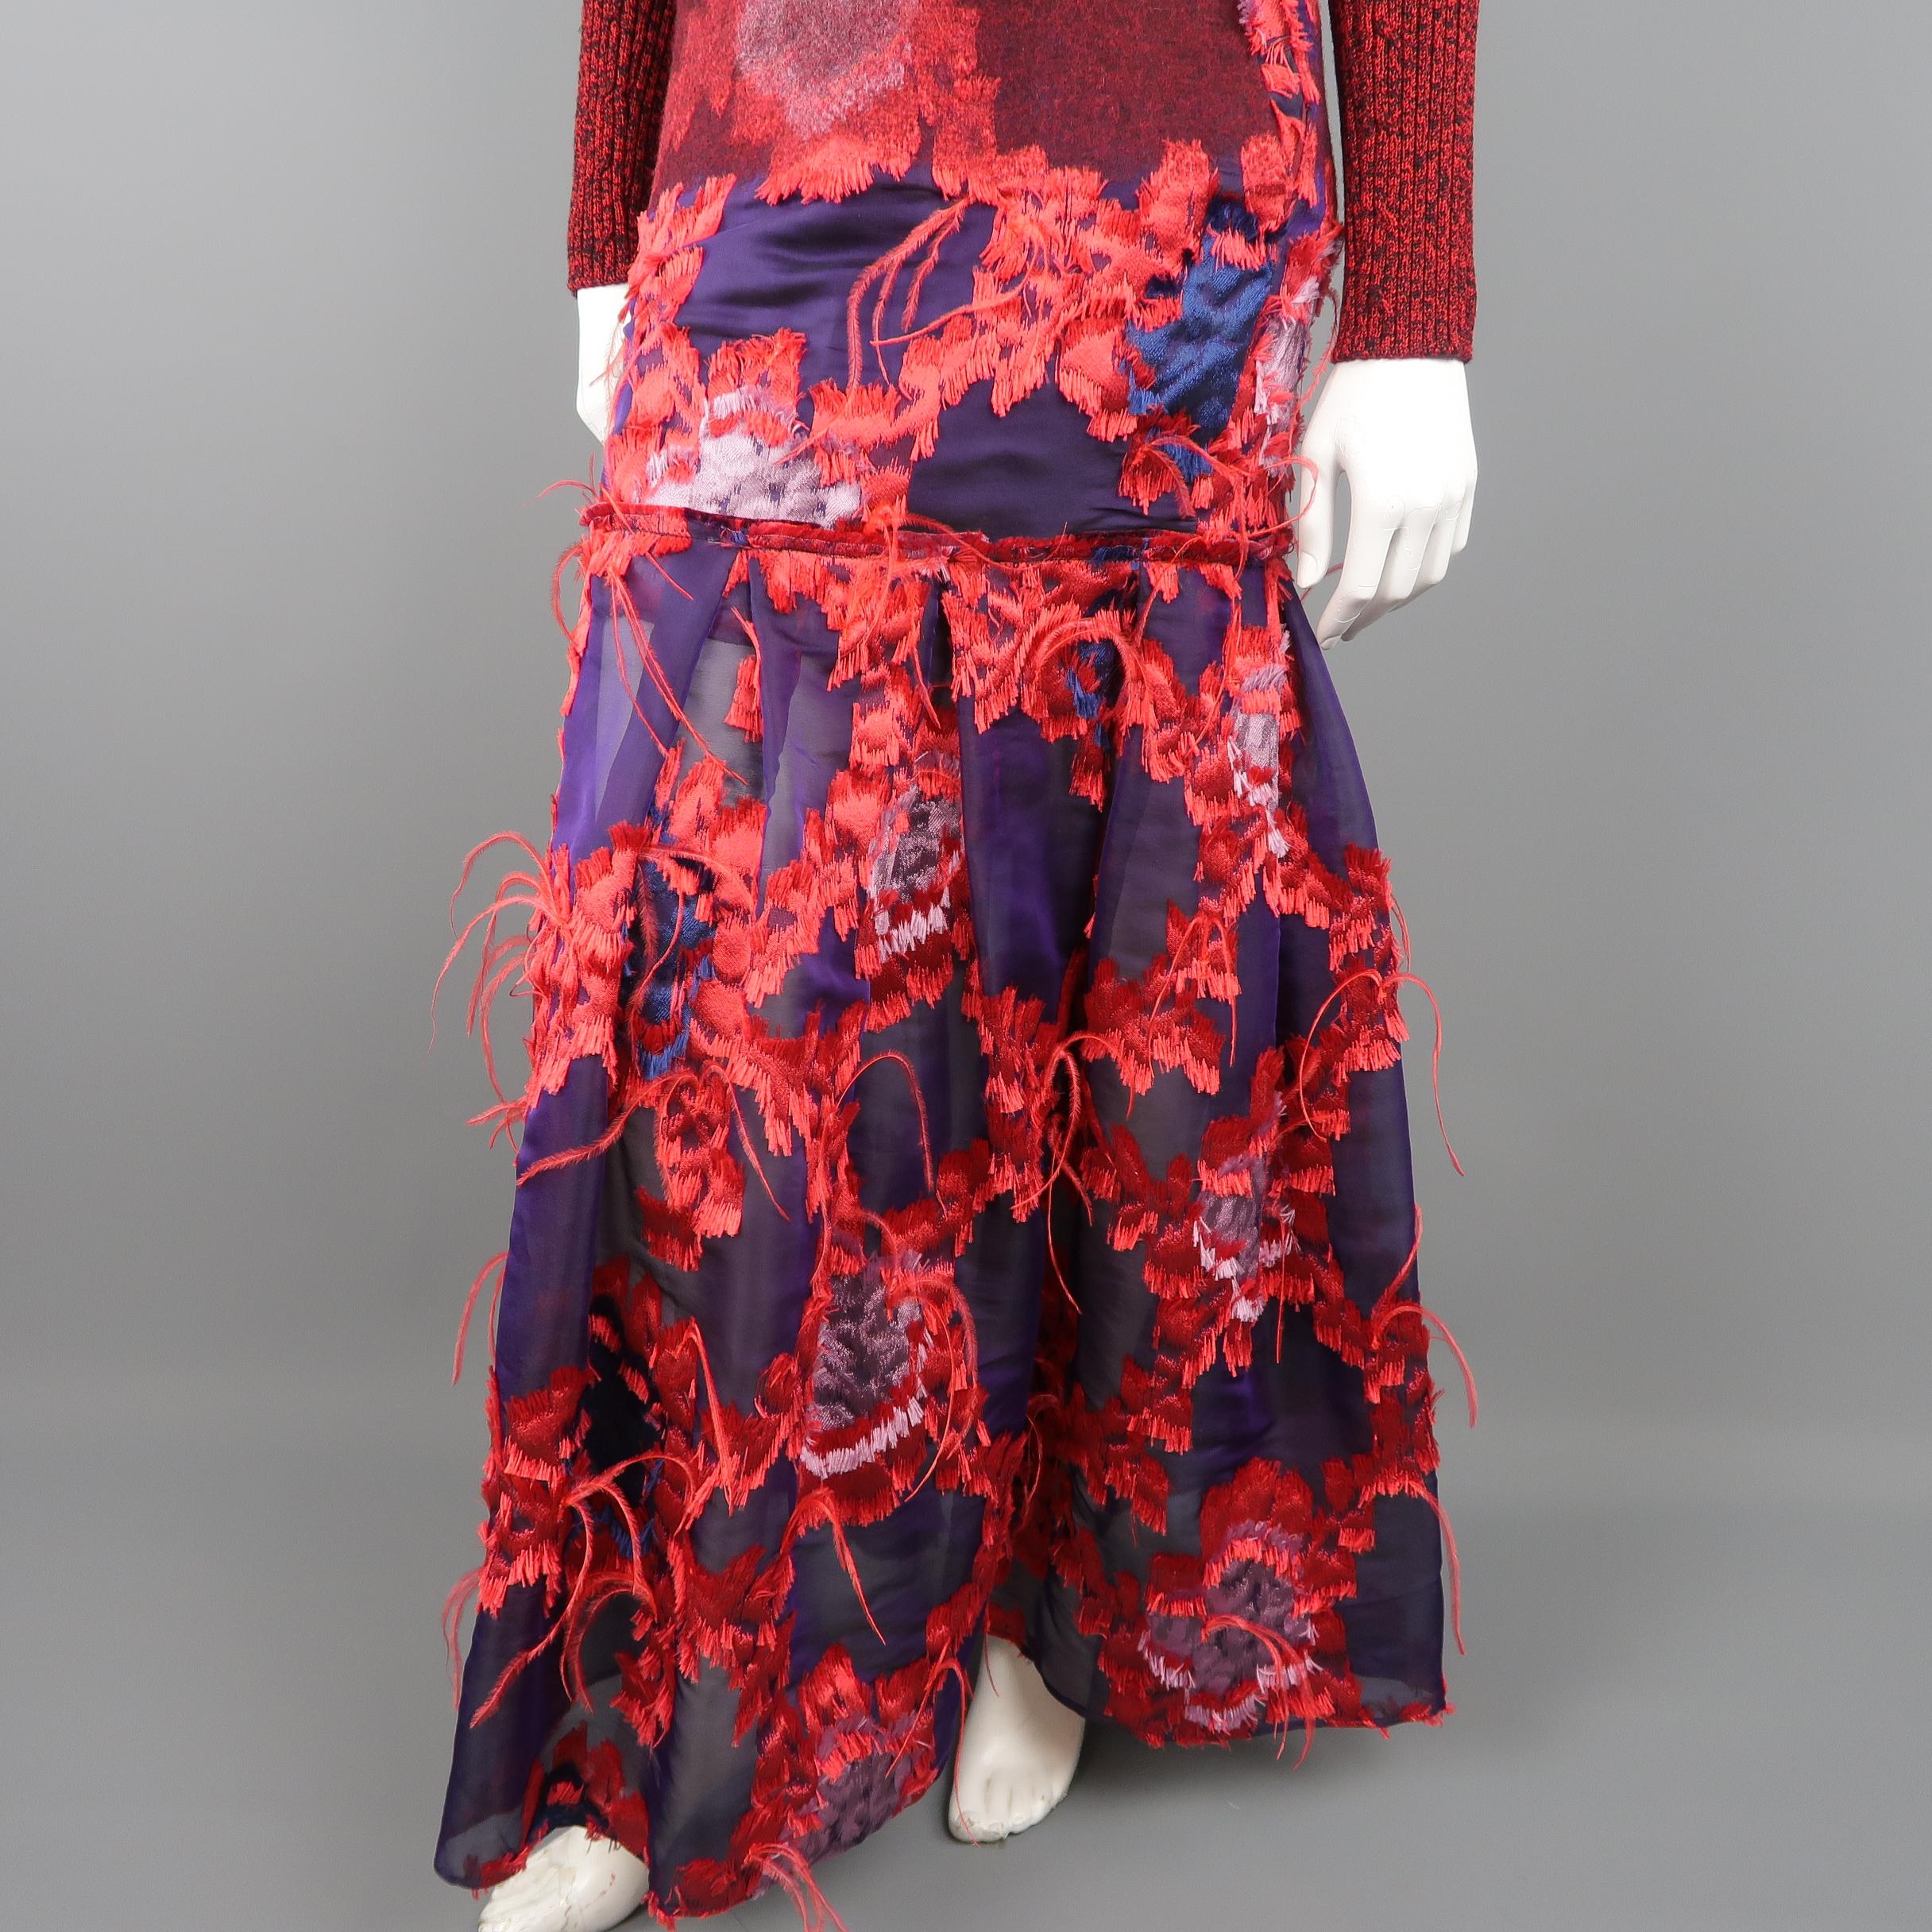 ERDEM Gown - Fall 2015 Runway - Red, Purple, Knit, Taffeta Feather Evening Dress 2